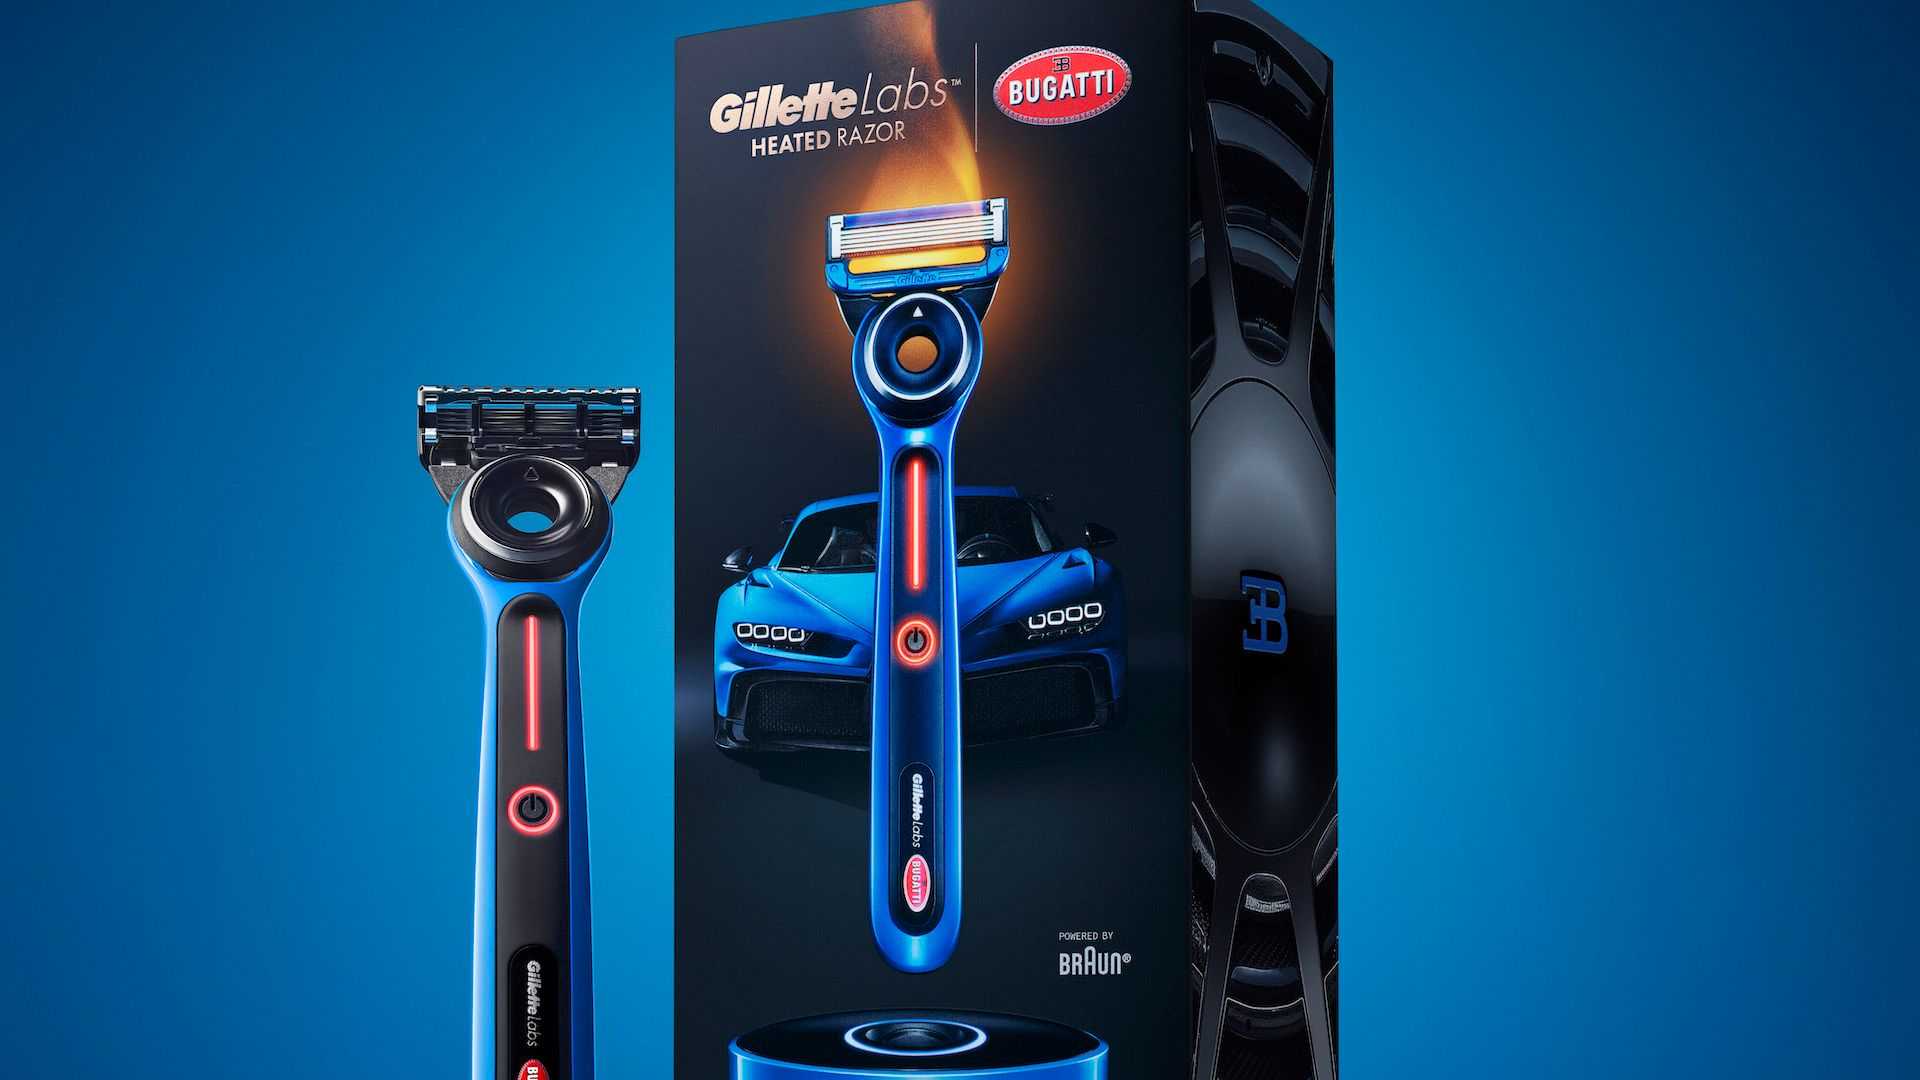 gillettelabs-x-bugatti-special-edition-heated-razor (5).jpg